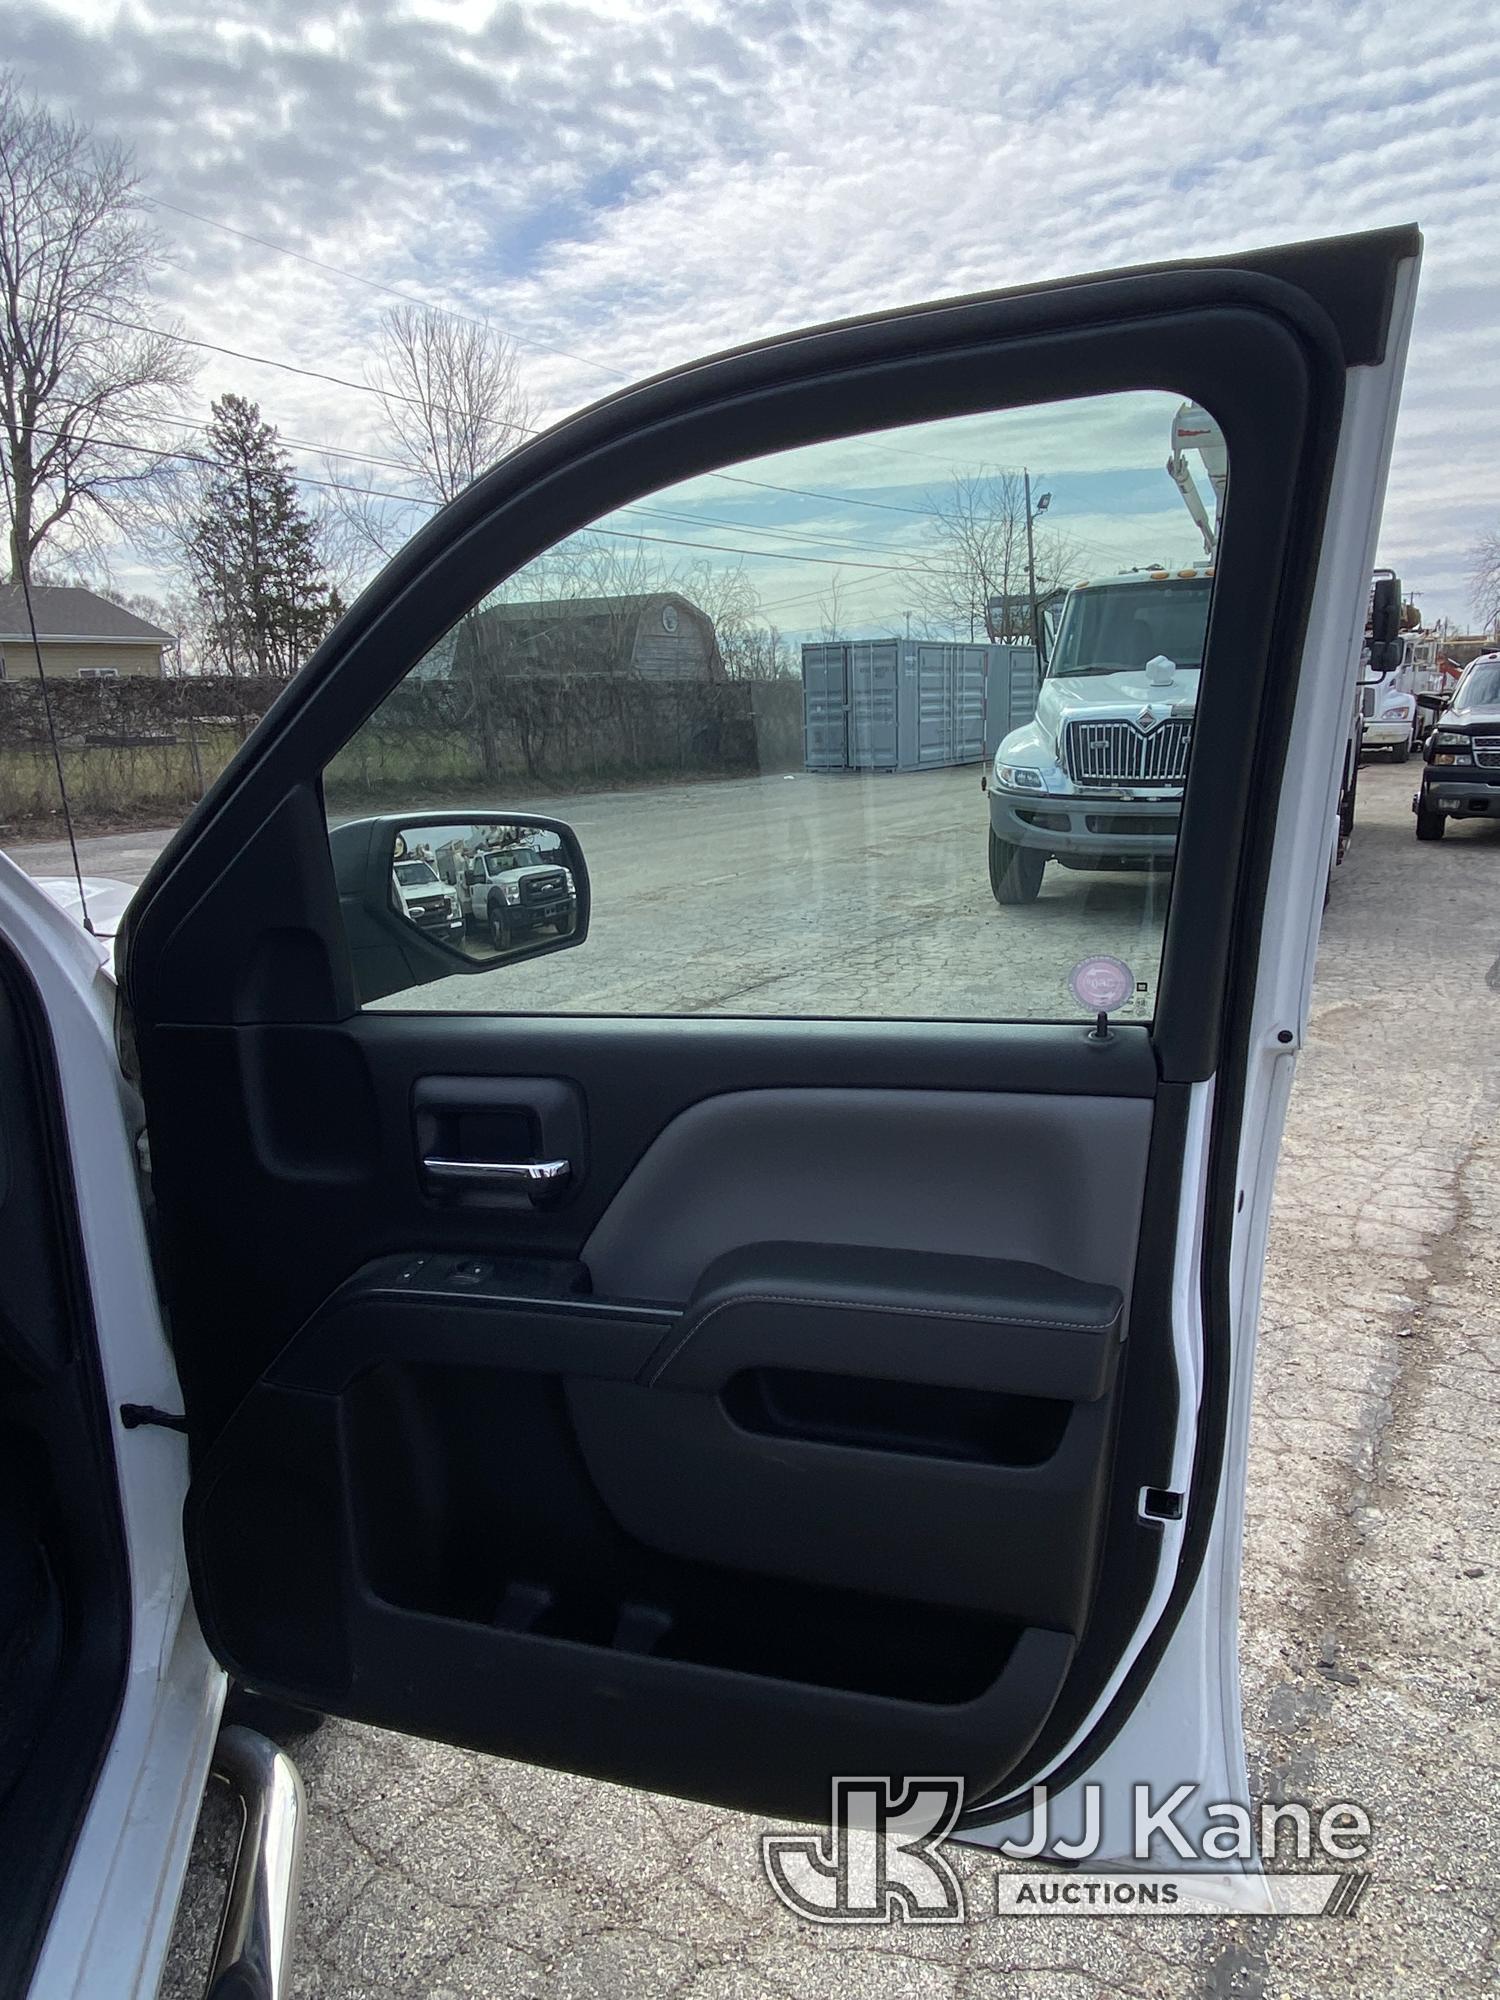 (South Beloit, IL) 2014 Chevrolet Silverado 1500 4x4 Crew-Cab Pickup Truck Does Not Start, Service B